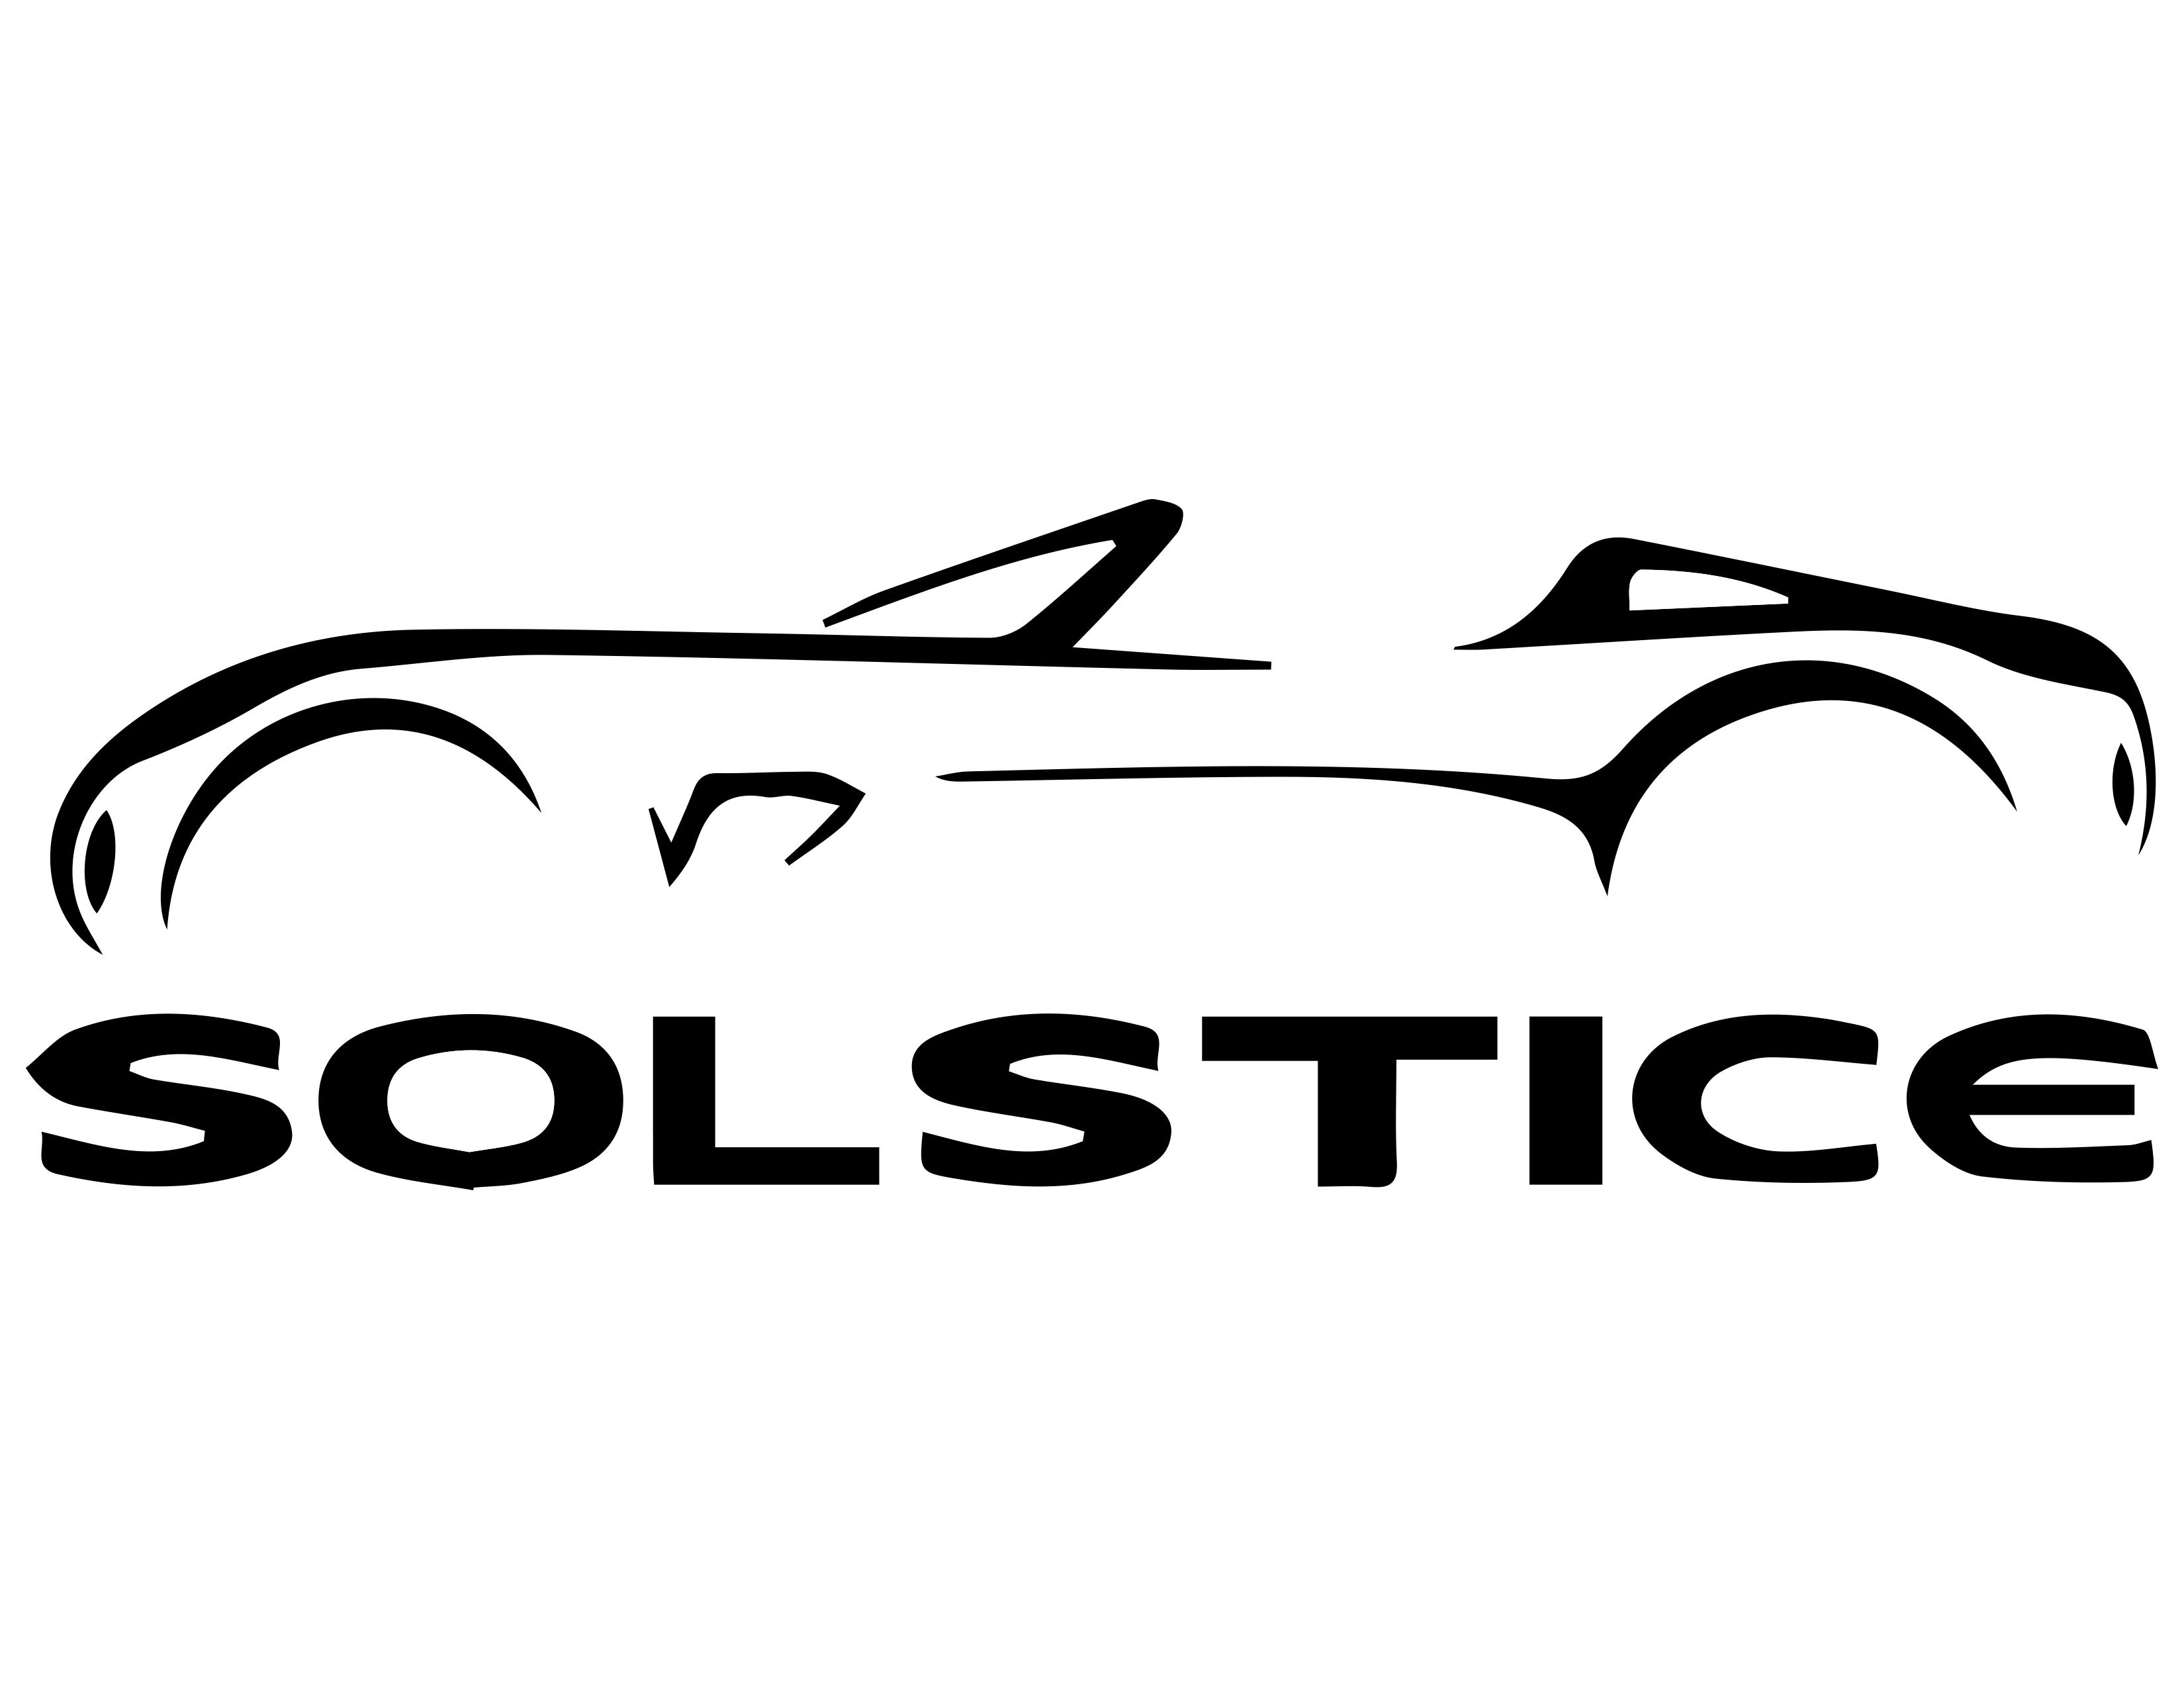 solstice-logo-page-001